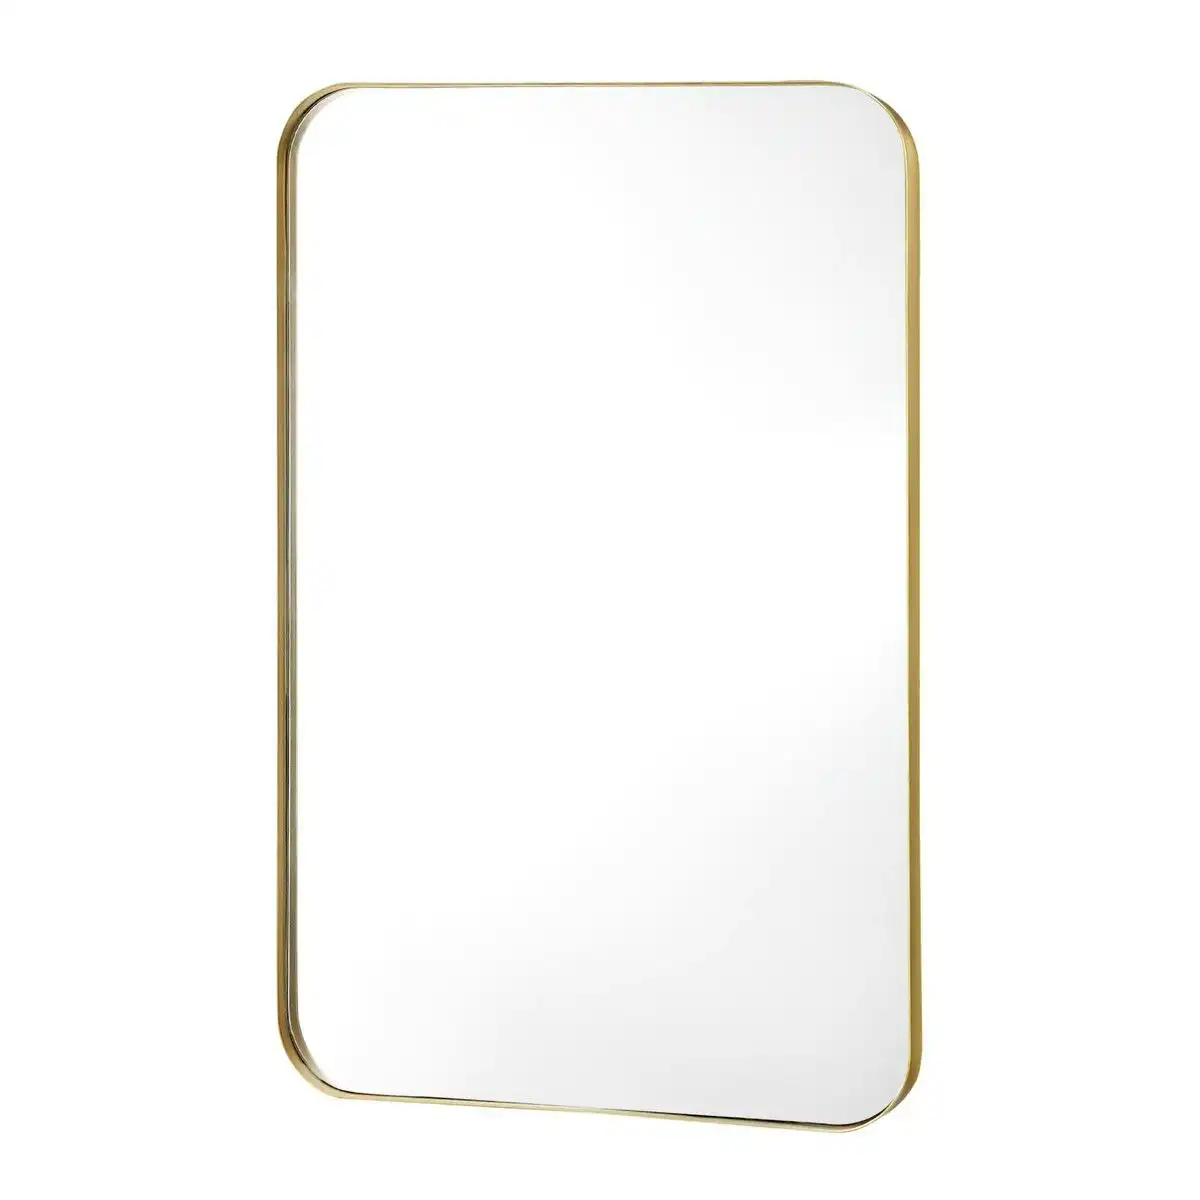 LUXSUITE Wall Bathroom Mirror Rectangle Standing Large Vanity Gold Bedroom Hallway Mount Decorative Makeup Shower Shaving